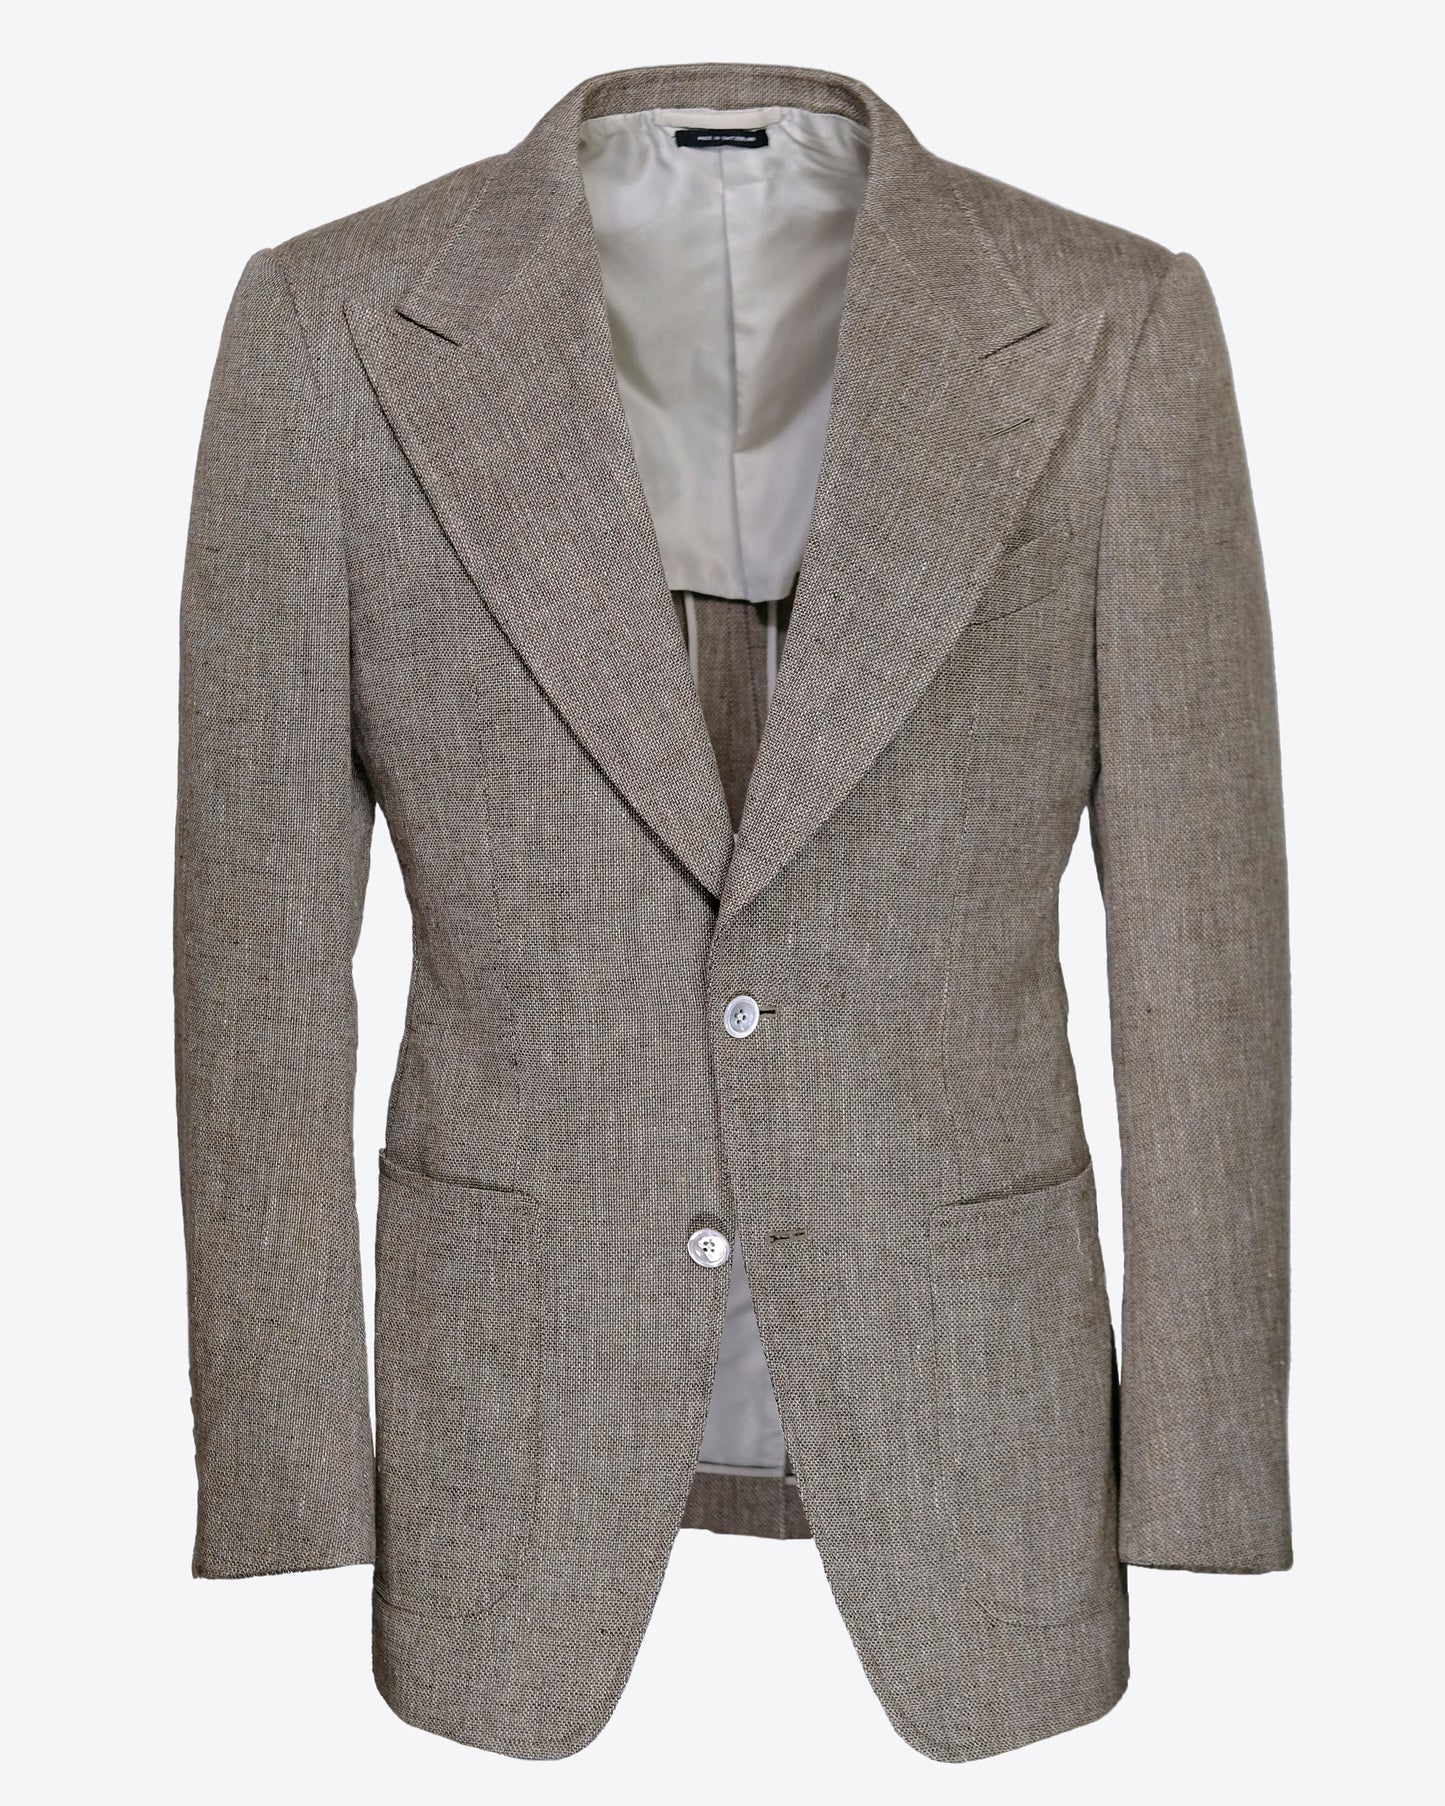 Tom Ford - Cotton/Silk Blend Sport Jacket, EU 48R